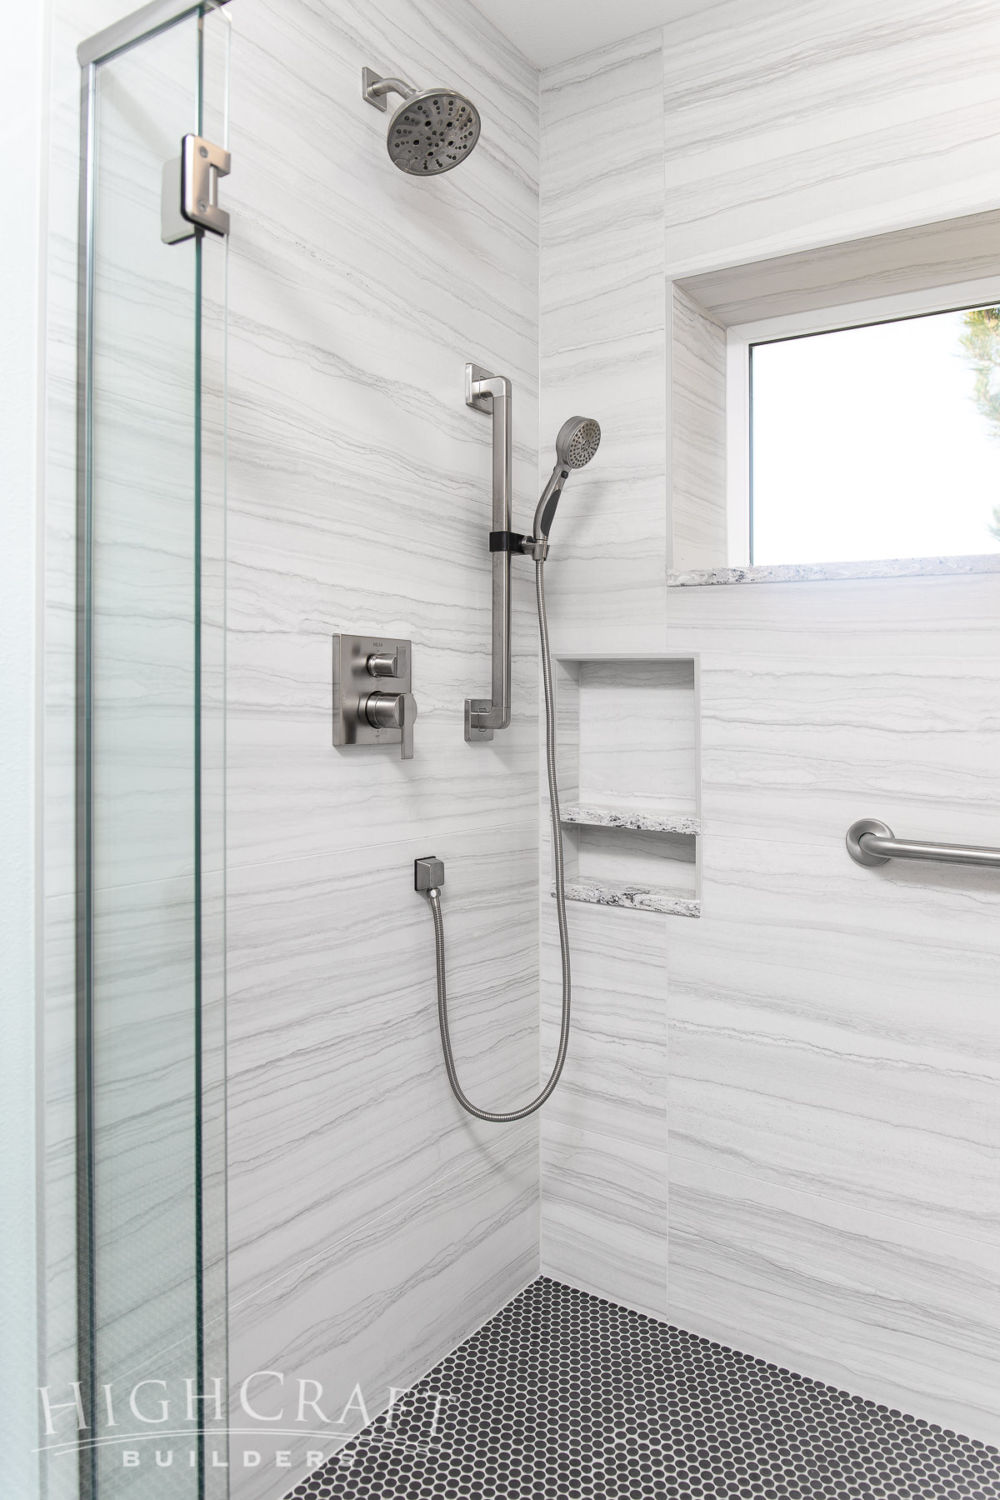 Accessible-Master-Bath-Remodel-Brushed-Nickel-Shower-Fixtures